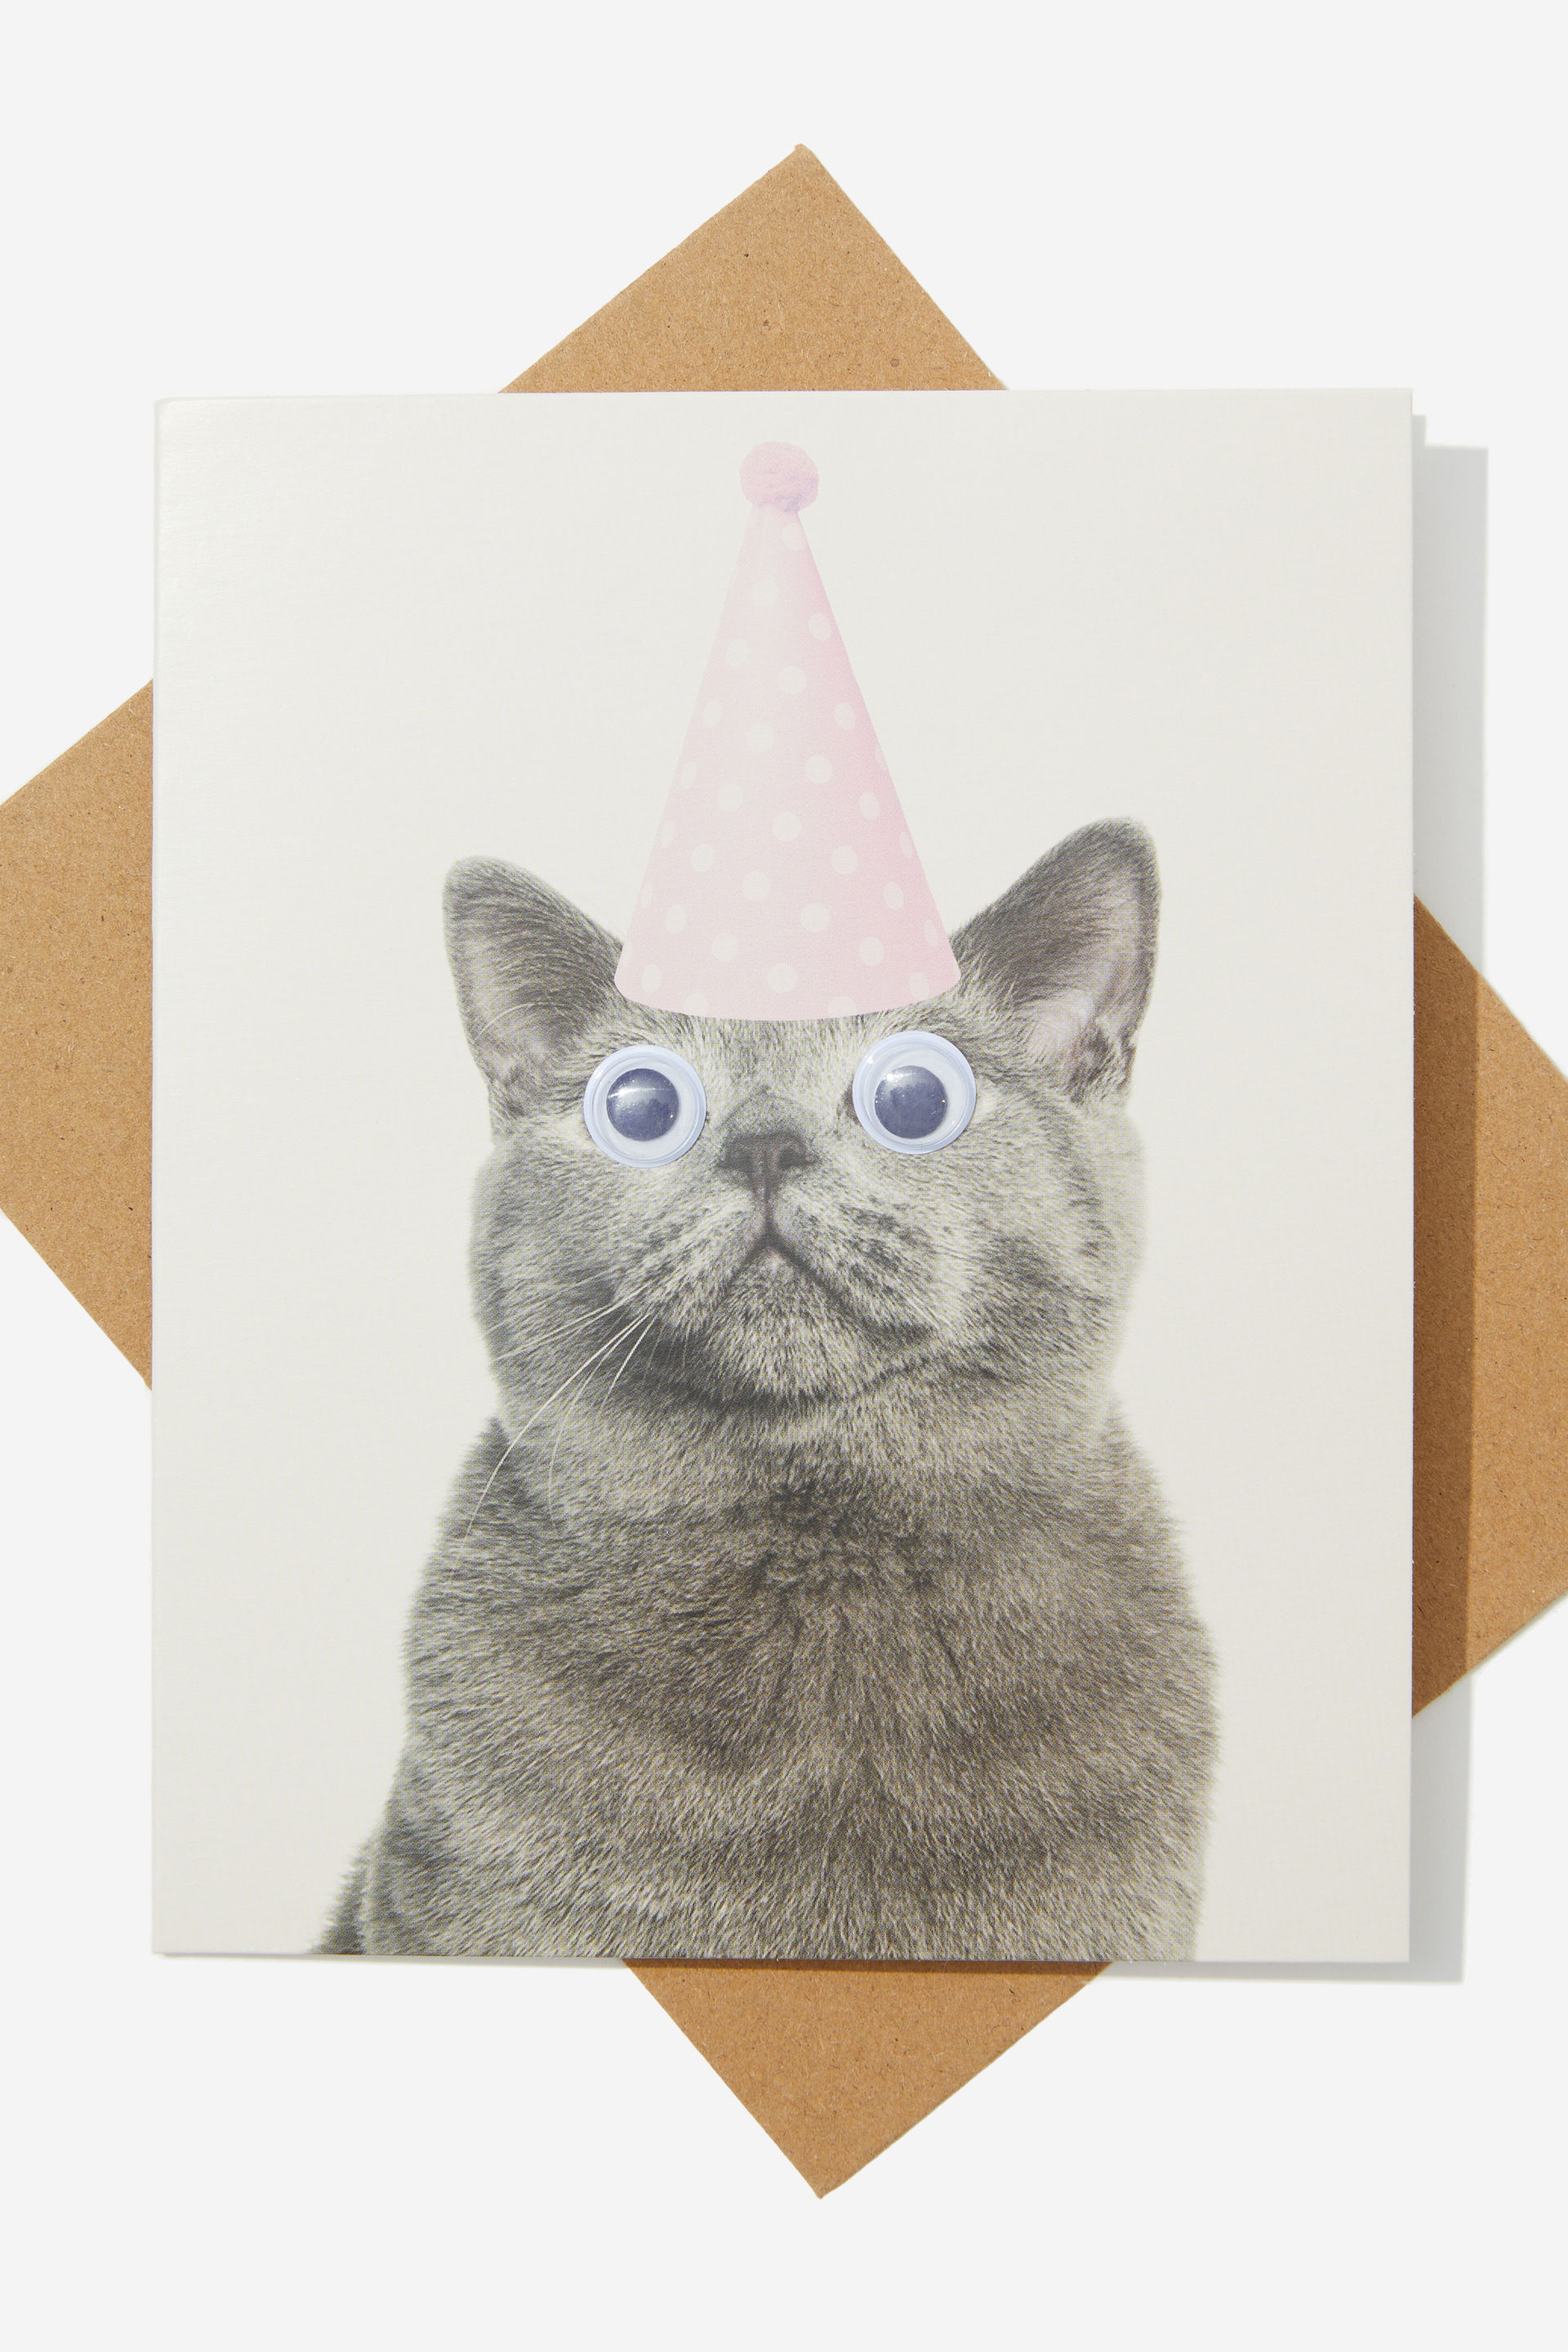 Typo - Premium Funny Birthday Card - Cat party hat googly eyes